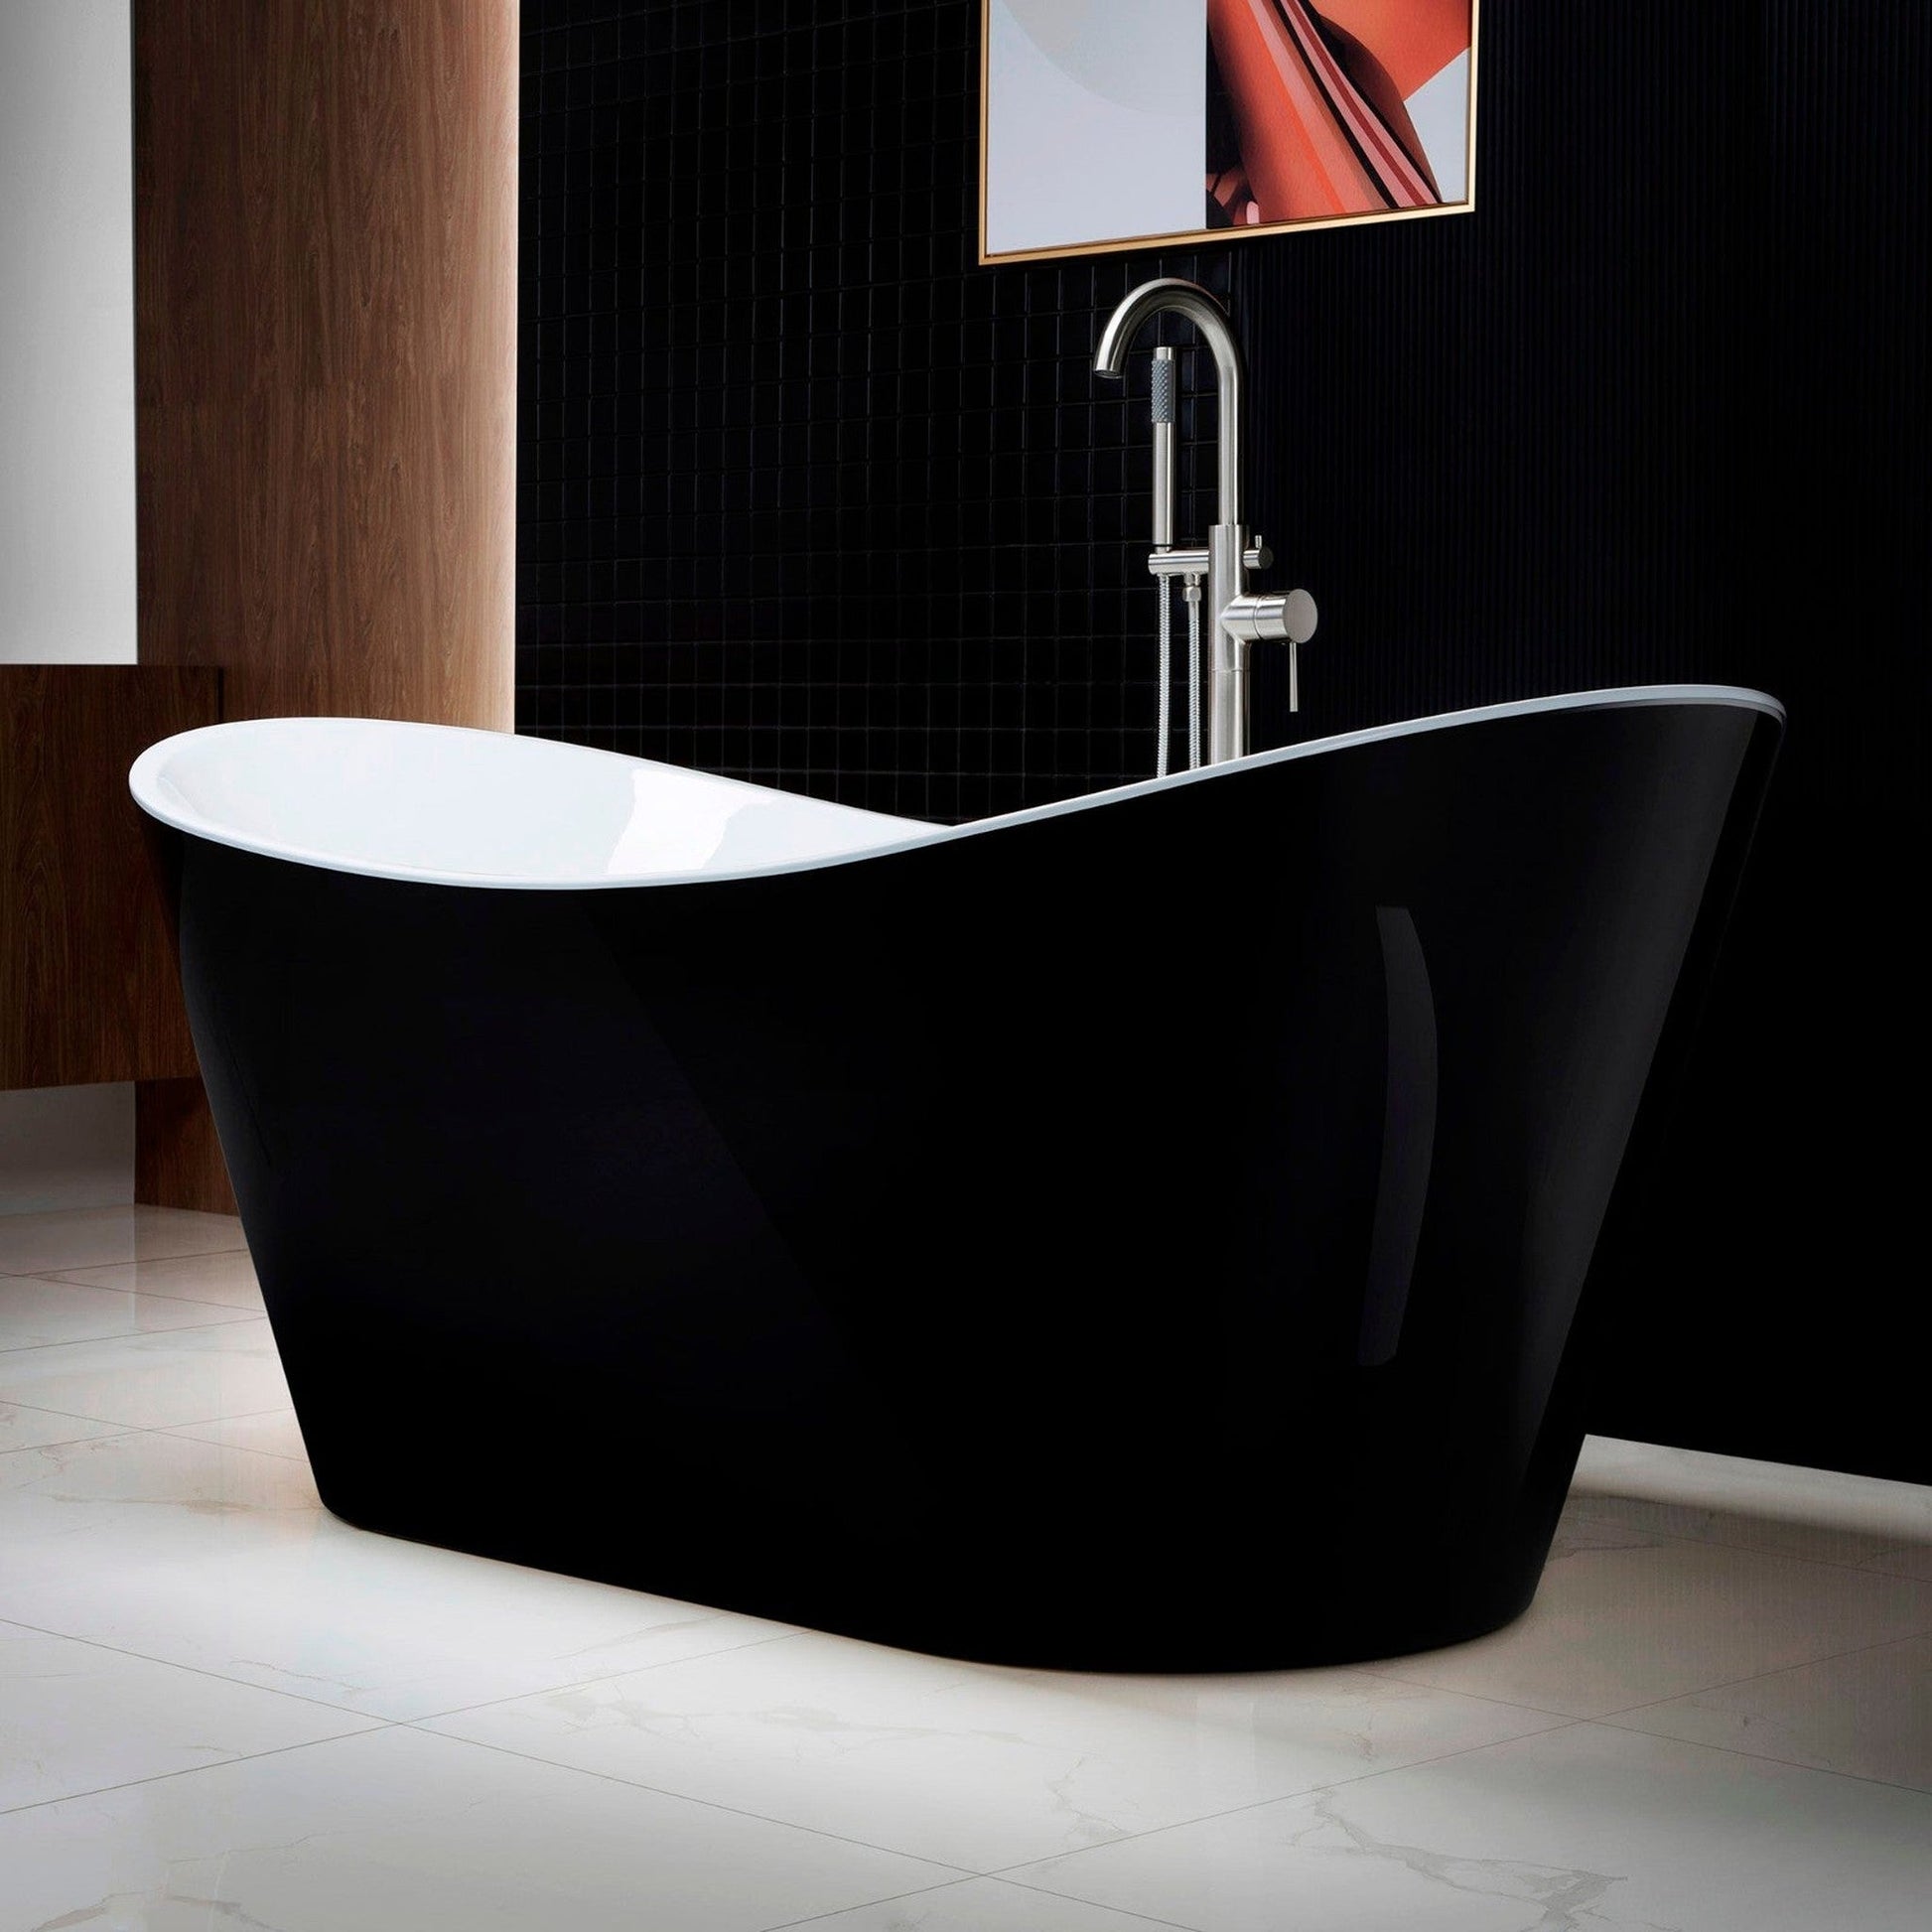 WoodBridge B1817 71" Black Acrylic Freestanding Soaking Bathtub With Brushed Nickel Drain, Overflow, F0070BNVT Tub Filler and Caddy Tray